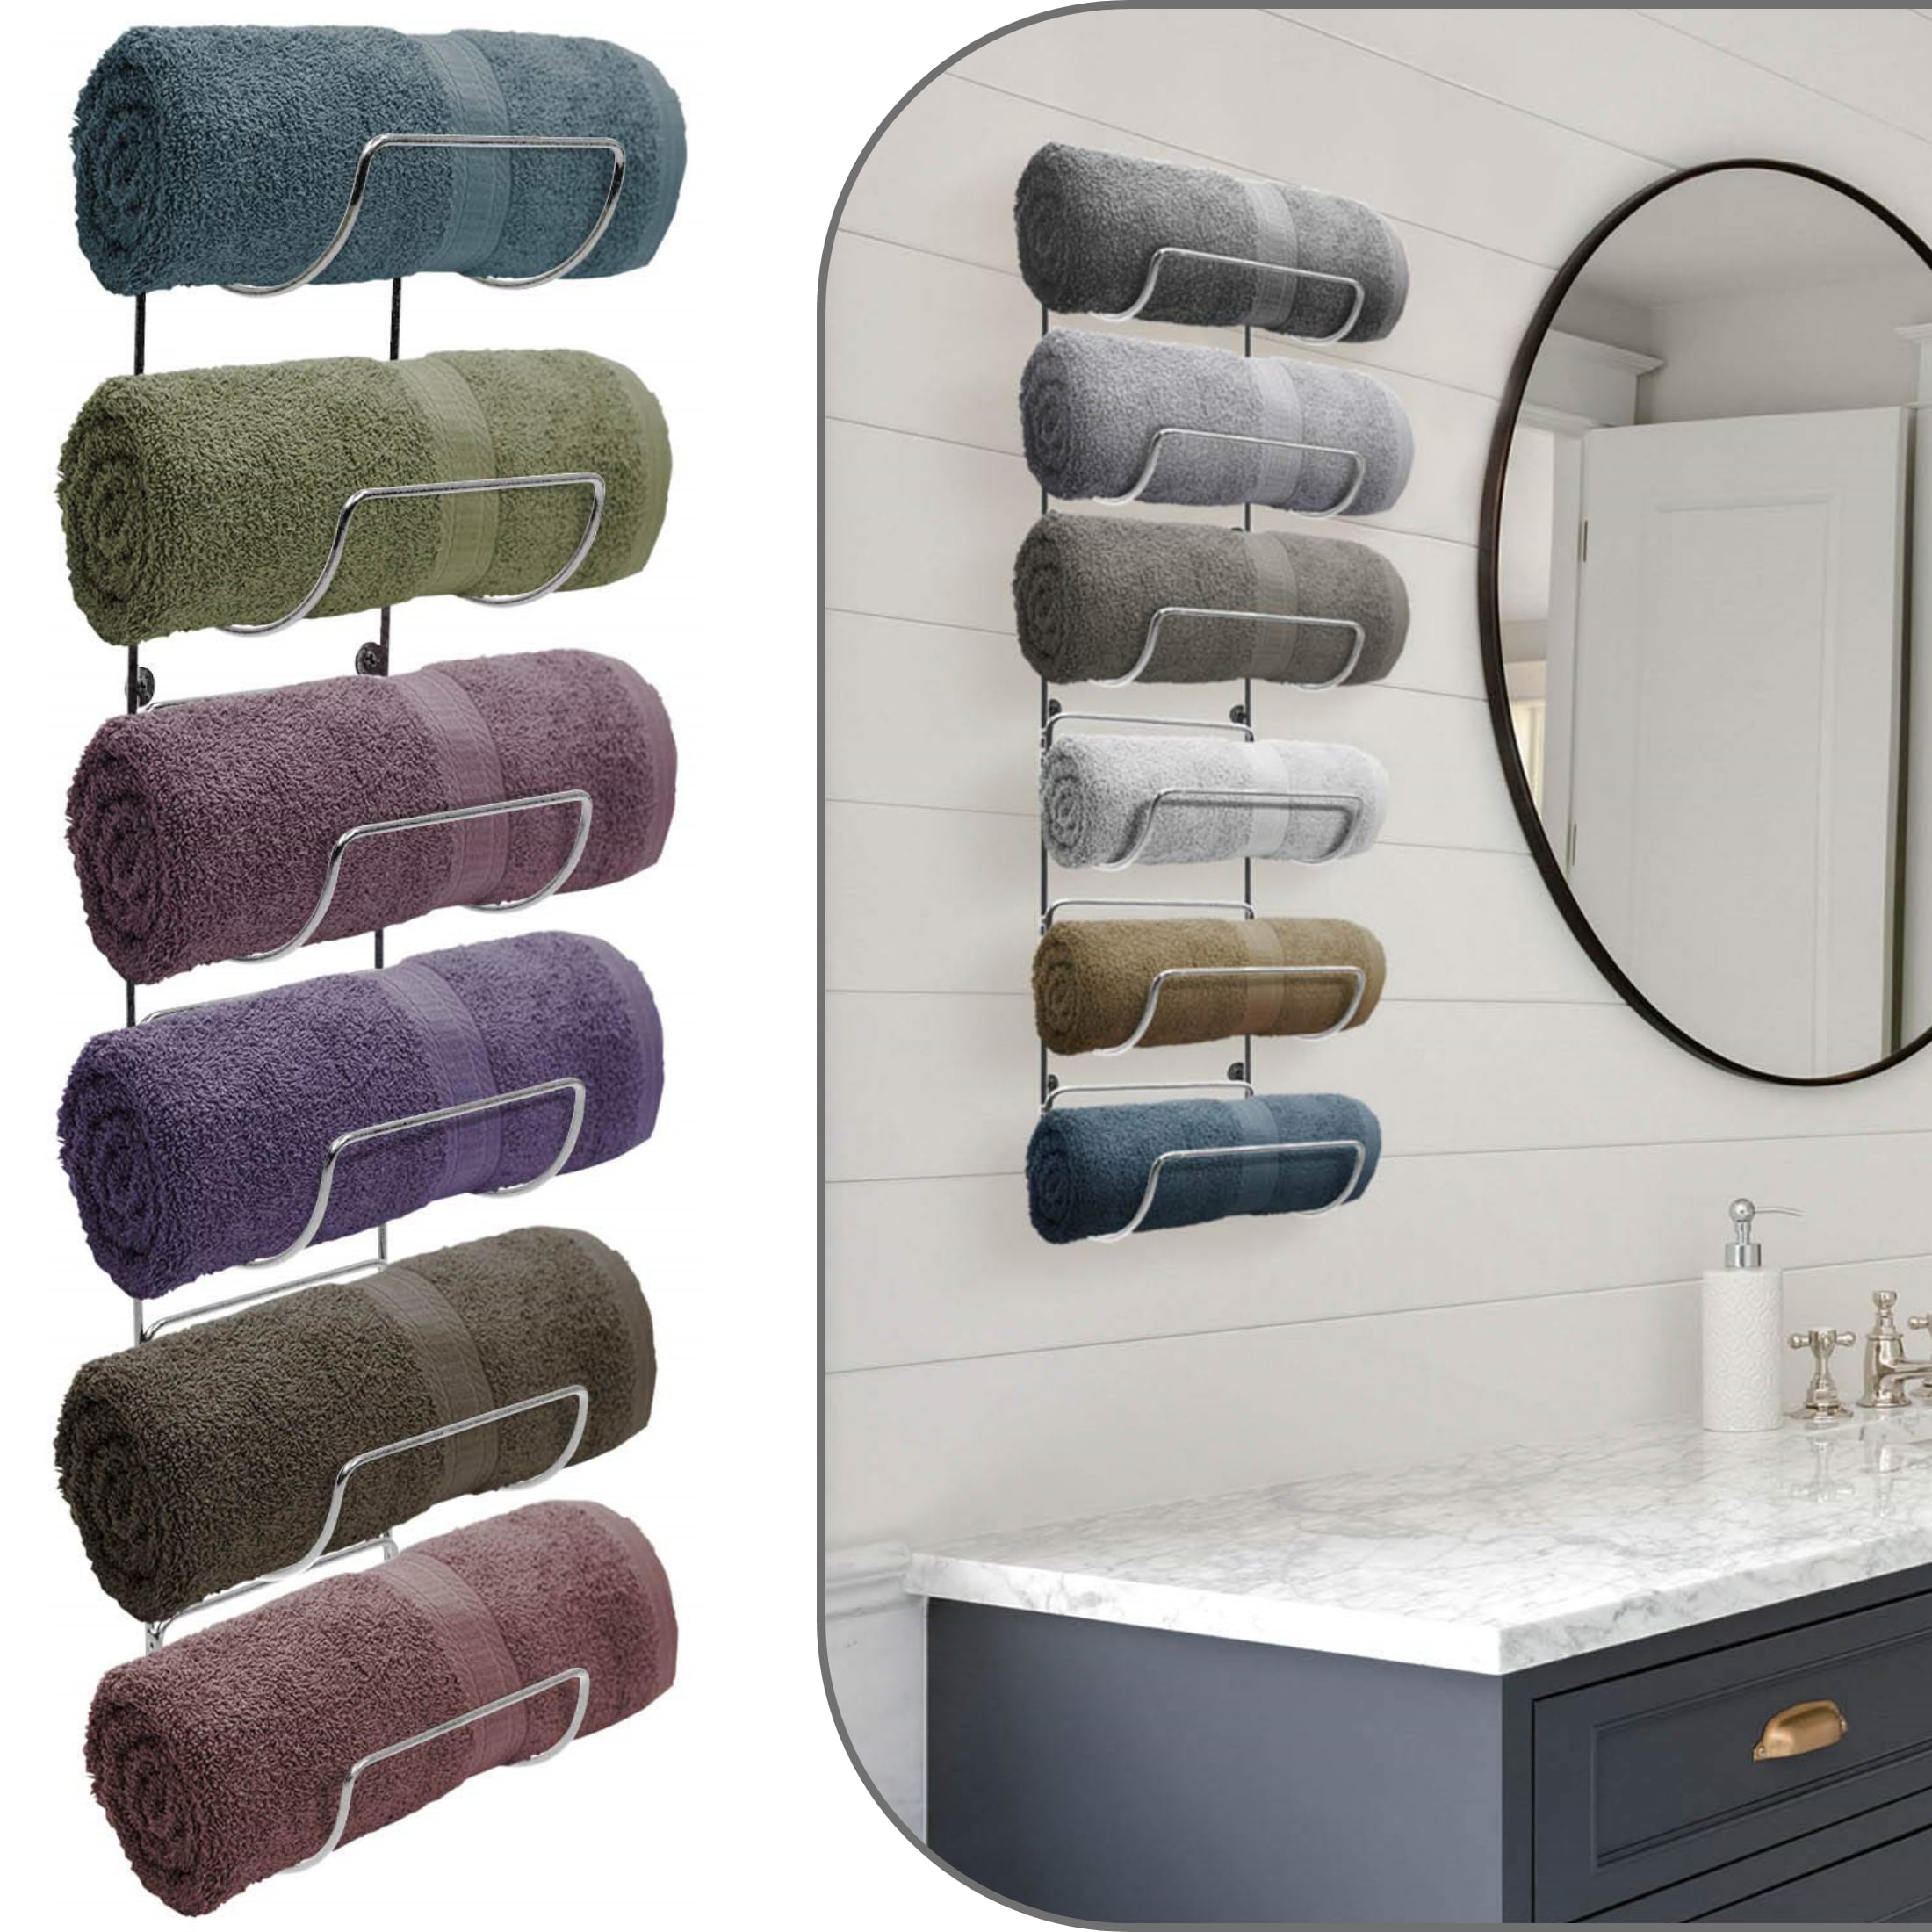  Towel Rack Wall Mounted, LAFEALO Silver Towel Rack for Bathroom,  Bath Towel Holder,Bathroom Organizer, Bathroom Towel Storage,Washcloths in  Small Bathroom/RV/Camper : Home & Kitchen